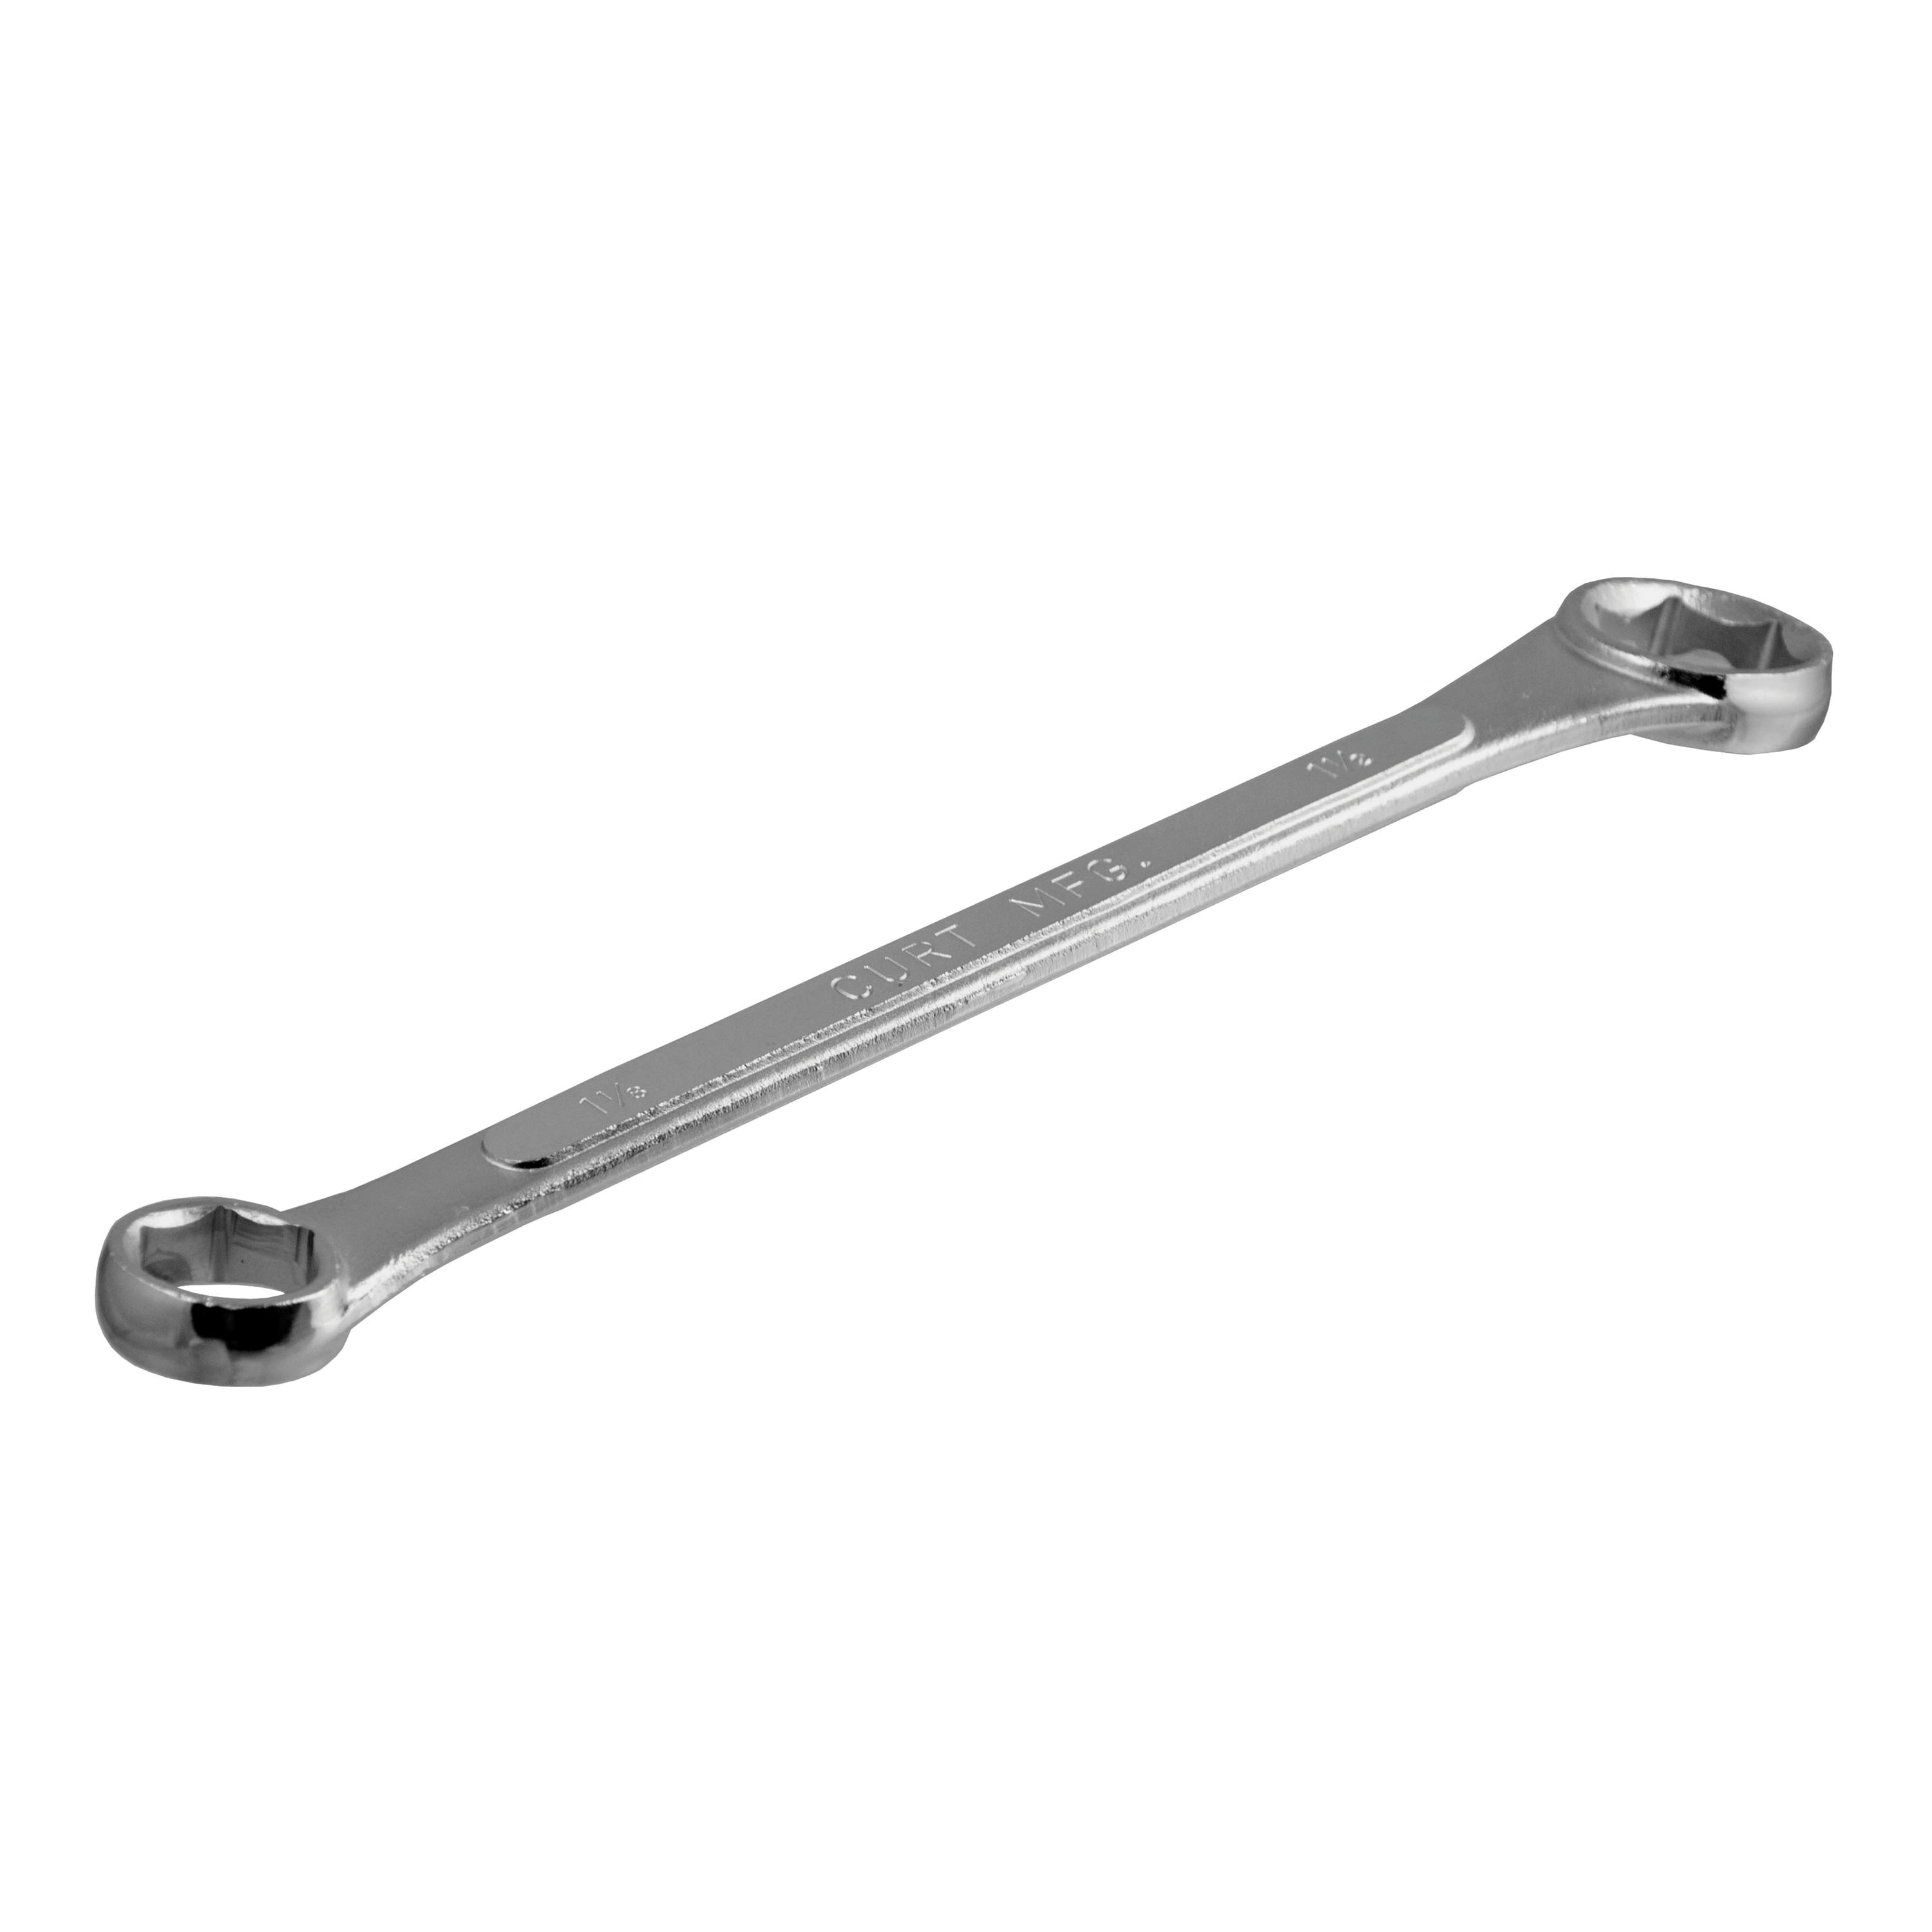 Curt 20001 Wrench, 1-1/8 x 1-1/2 in Head, 15-1/2 in OAL, Steel, Chrome - 3